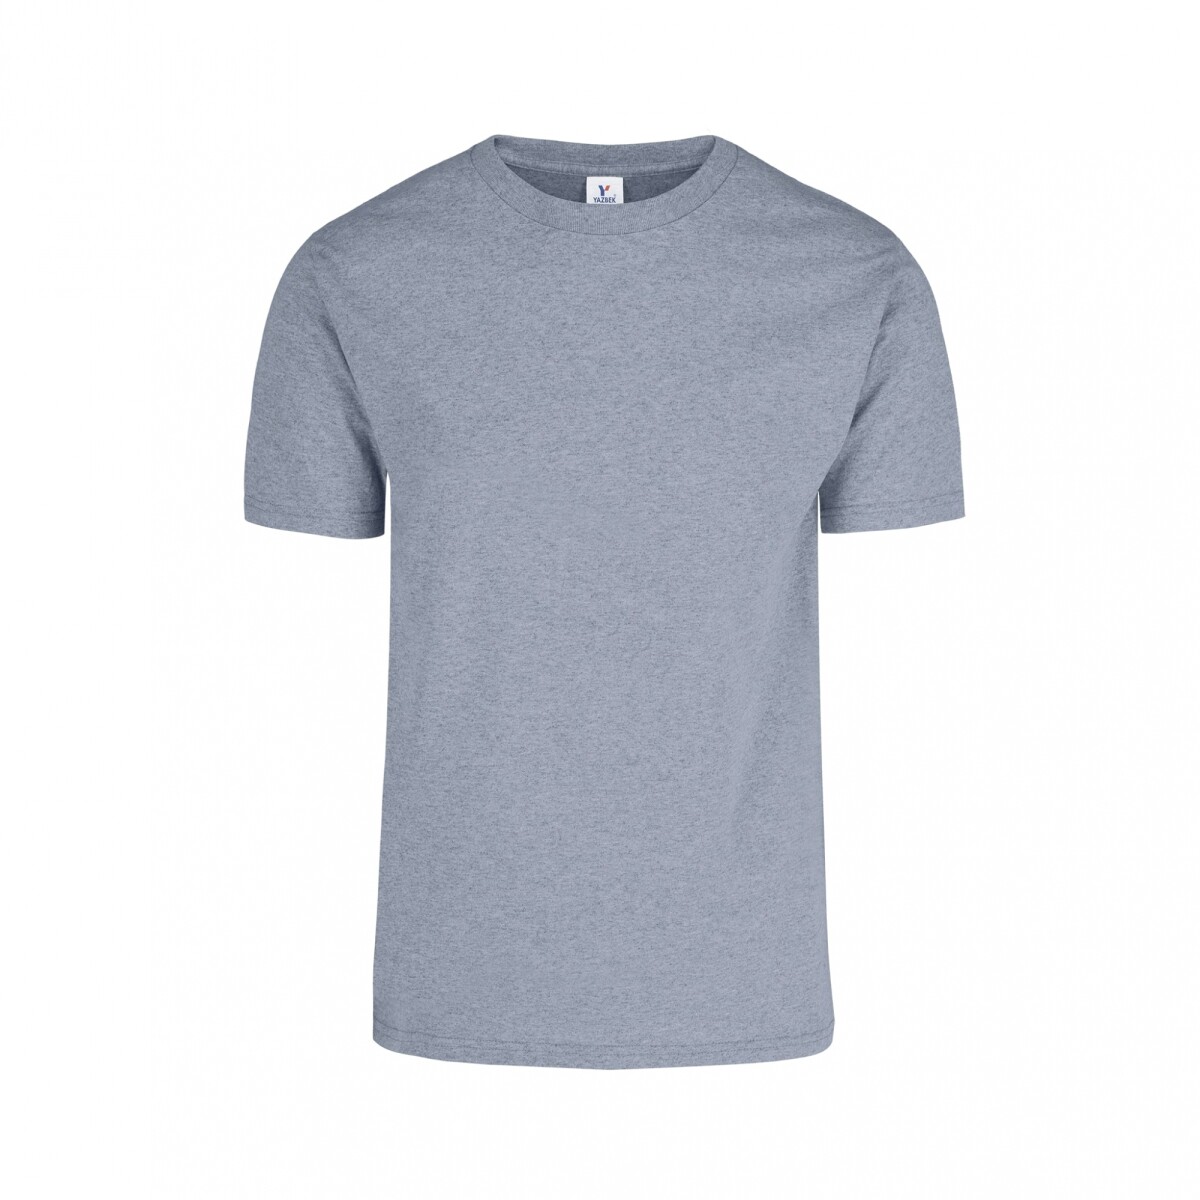 Camiseta a la base peso medio - Gris jaspe 